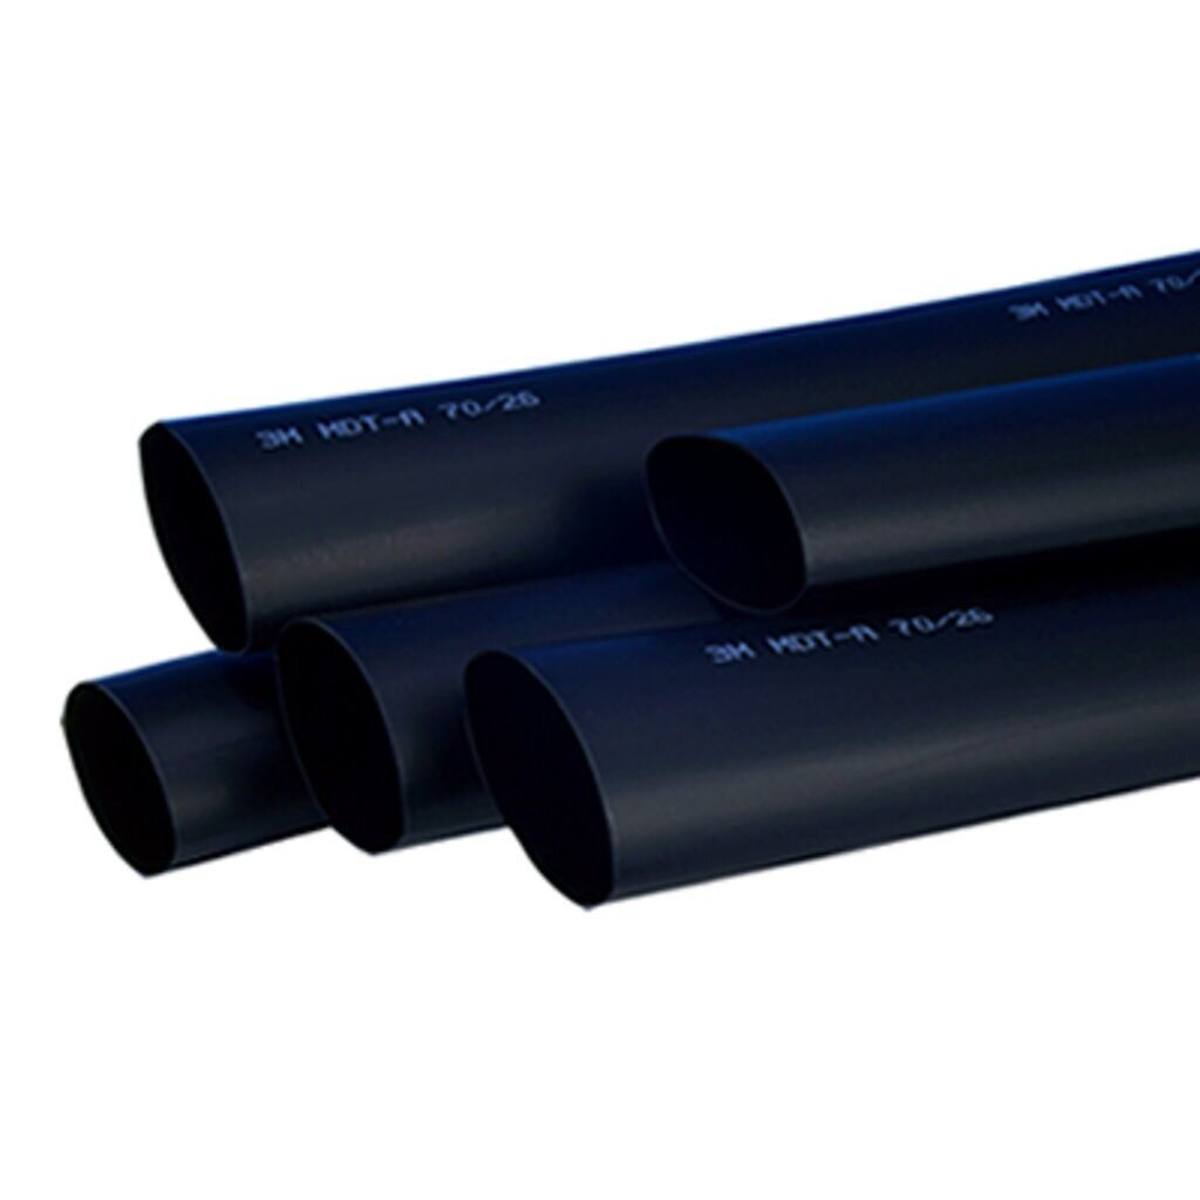 3M HDT-AN Tubo termorretráctil de pared gruesa con adhesivo, negro, 85/25 mm, 1 m